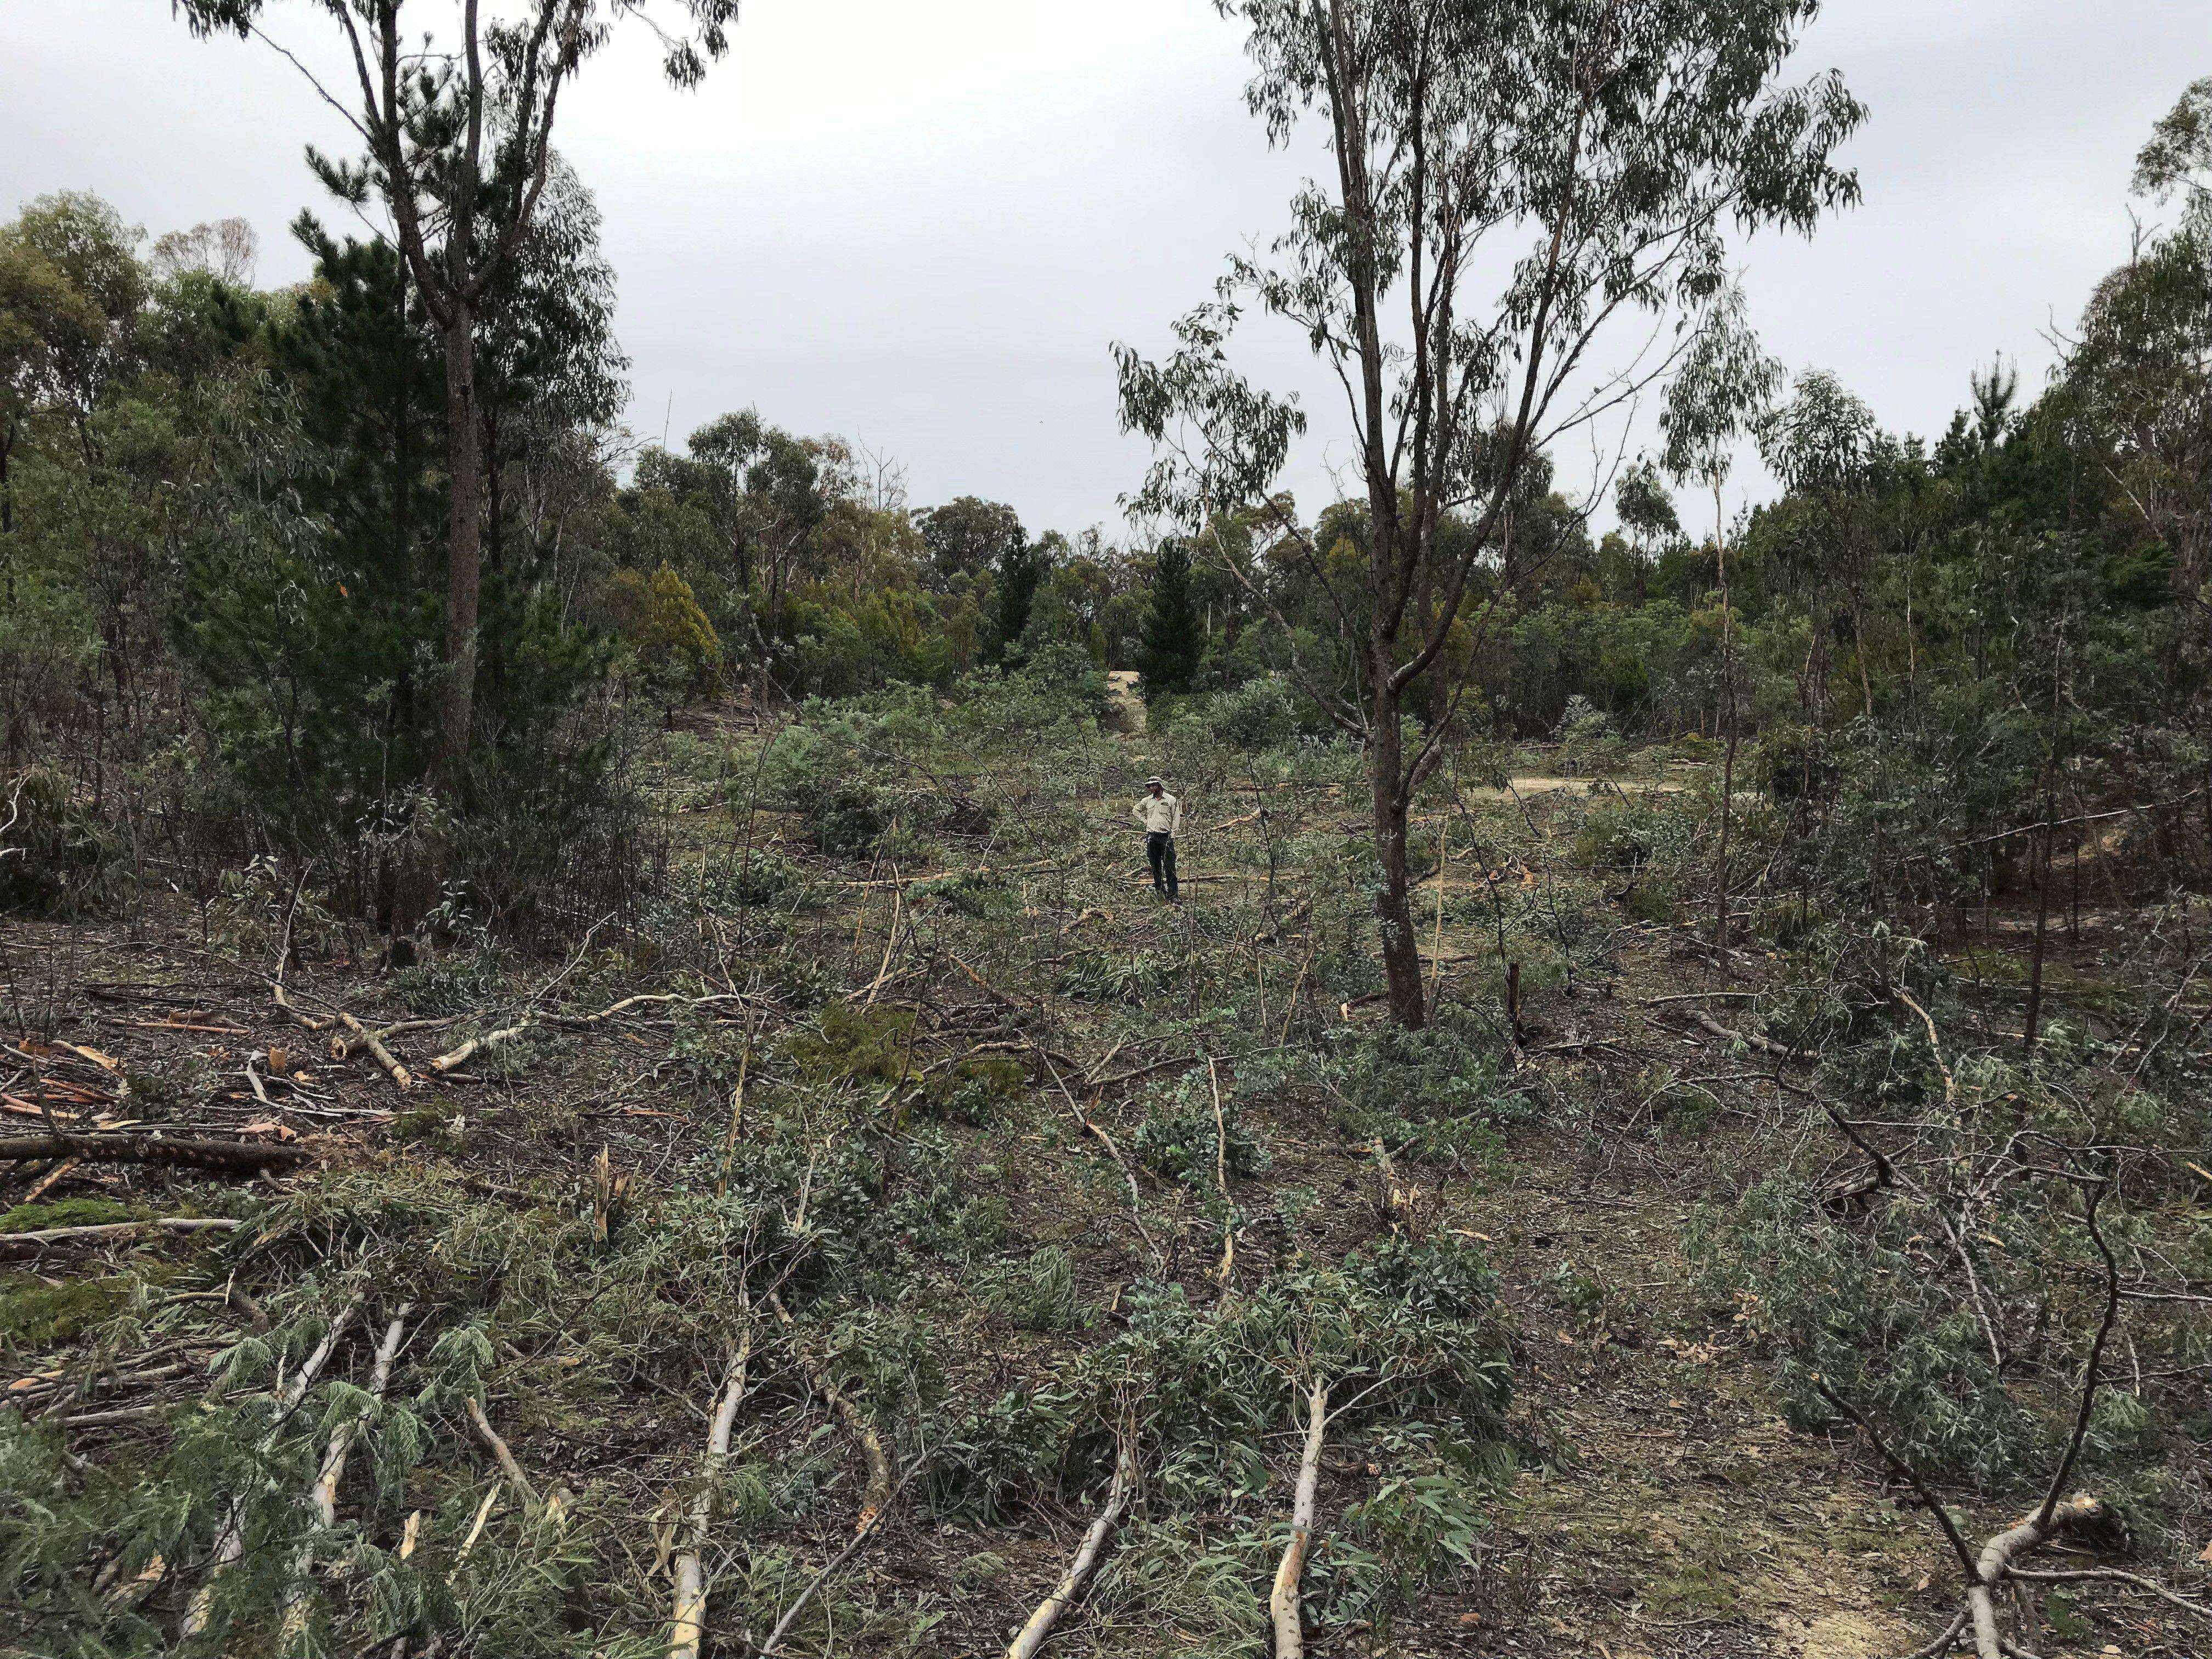 4WD wreaks havoc on regenerating bushland at Pierces Creek